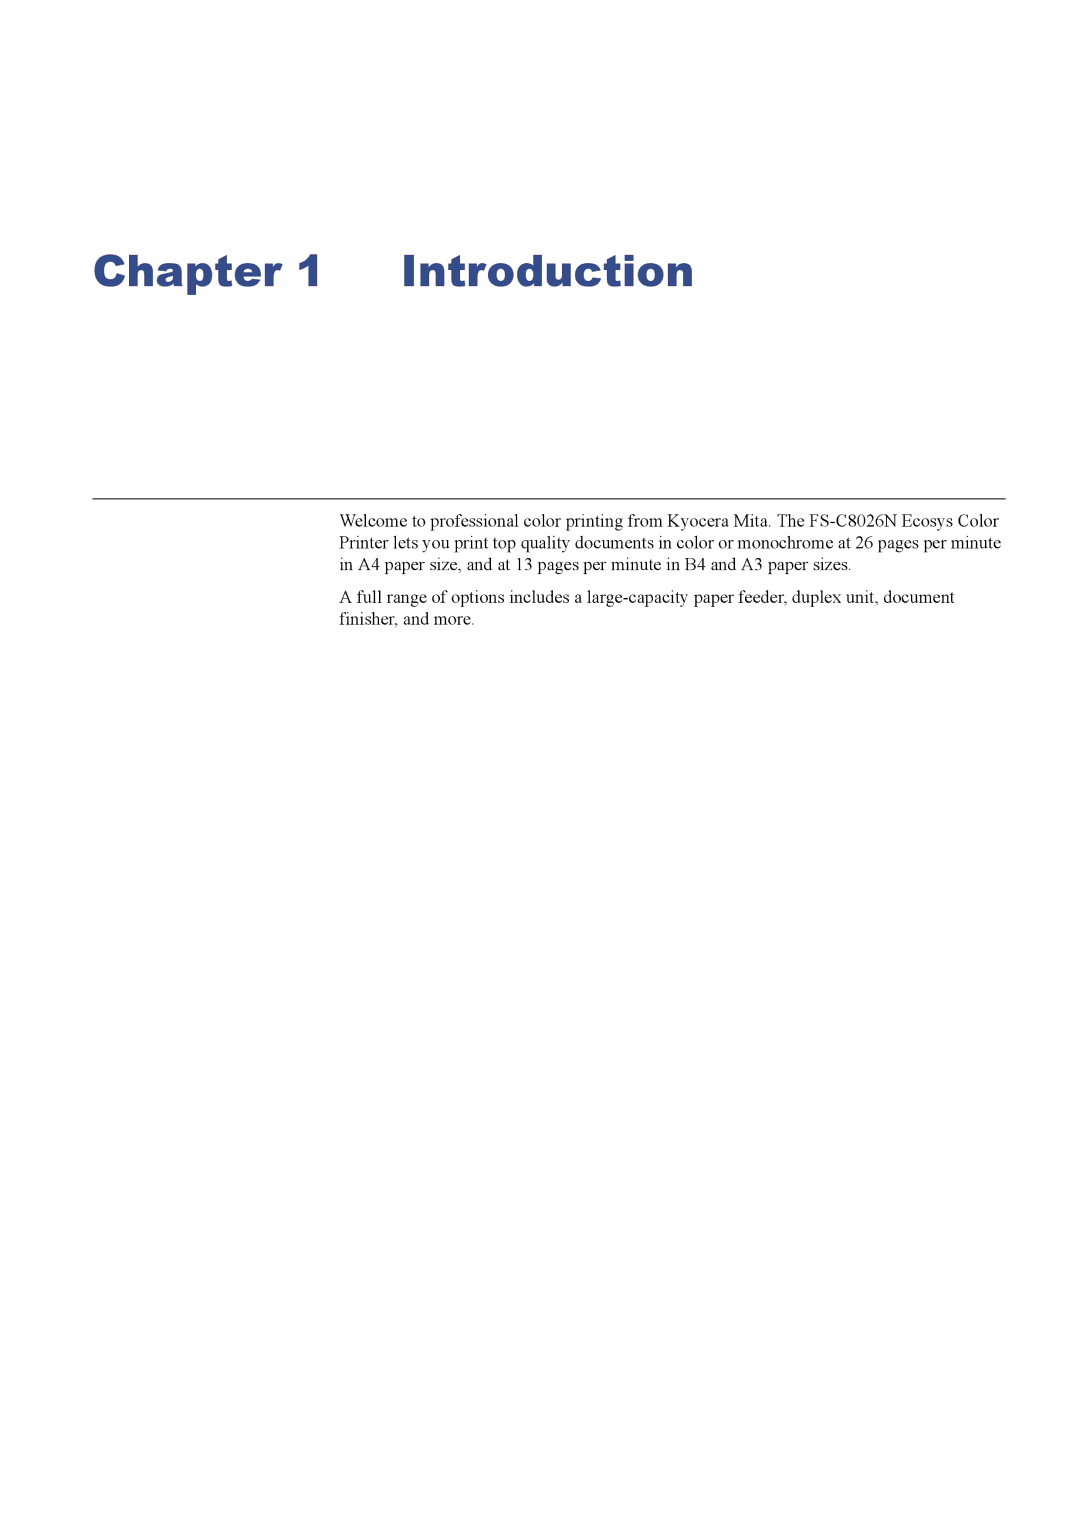 Kyocera FS-C8026N manual Introduction 